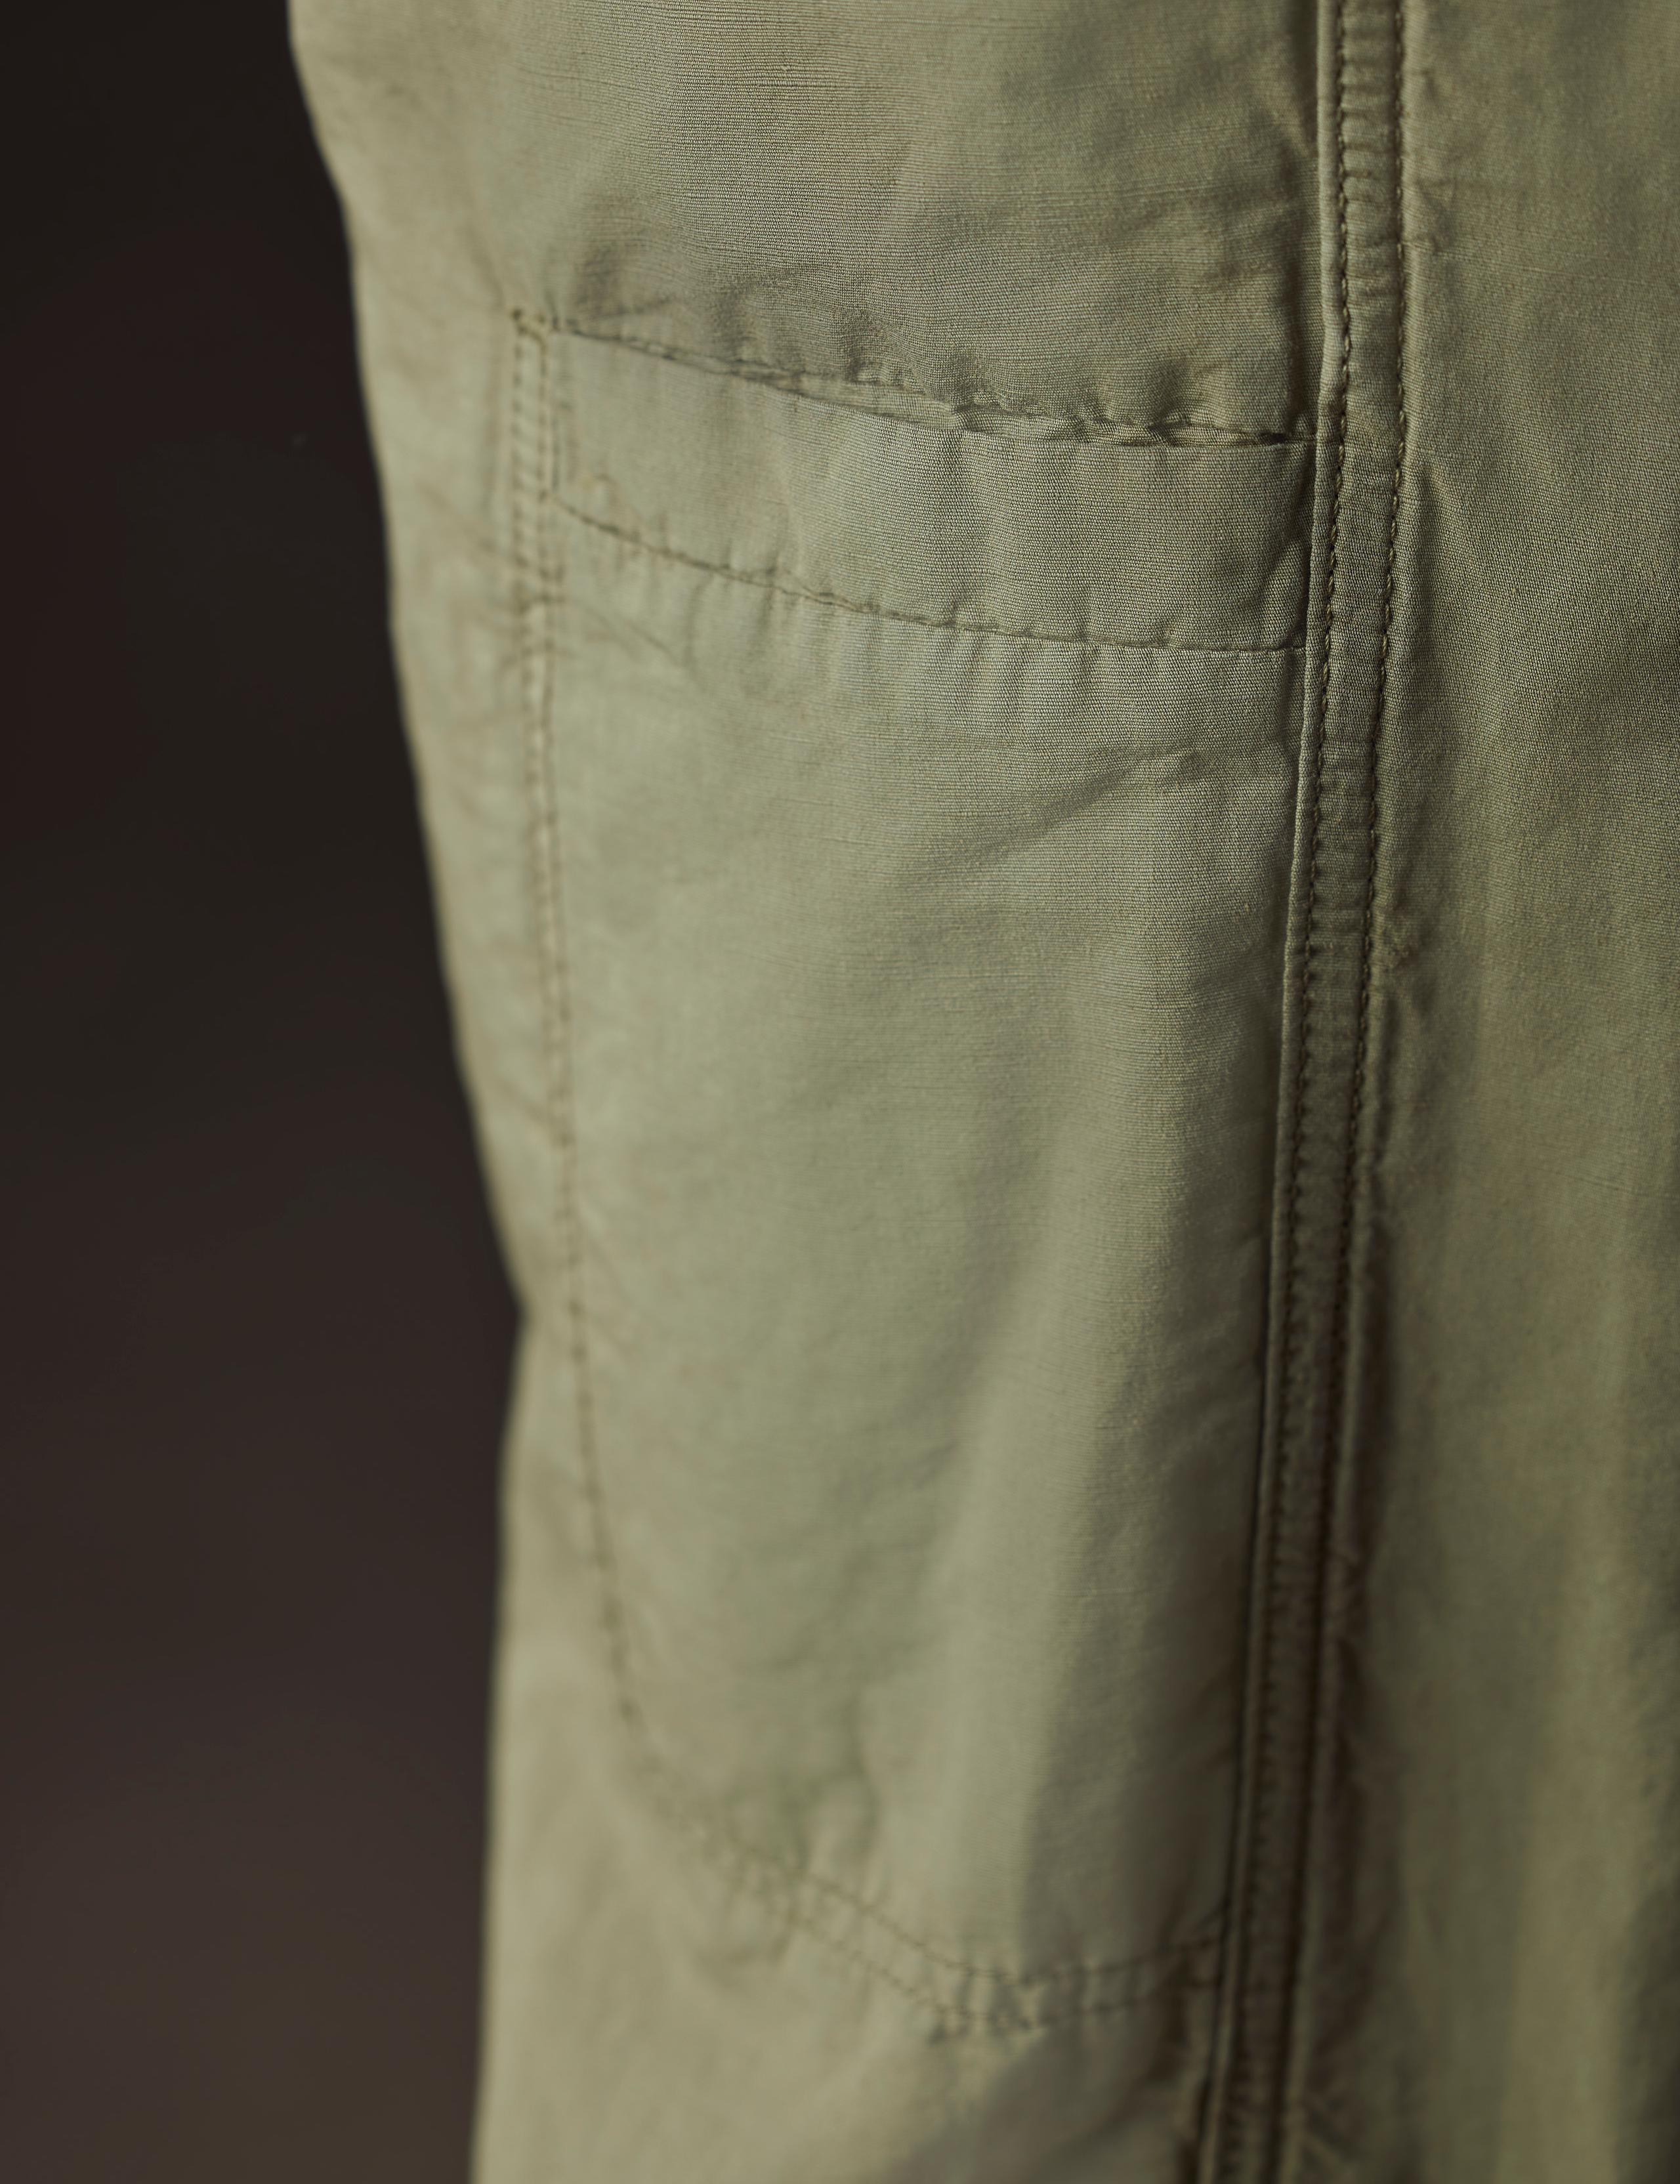 Single welt drop pocket detail of Highland Drawstring Pant